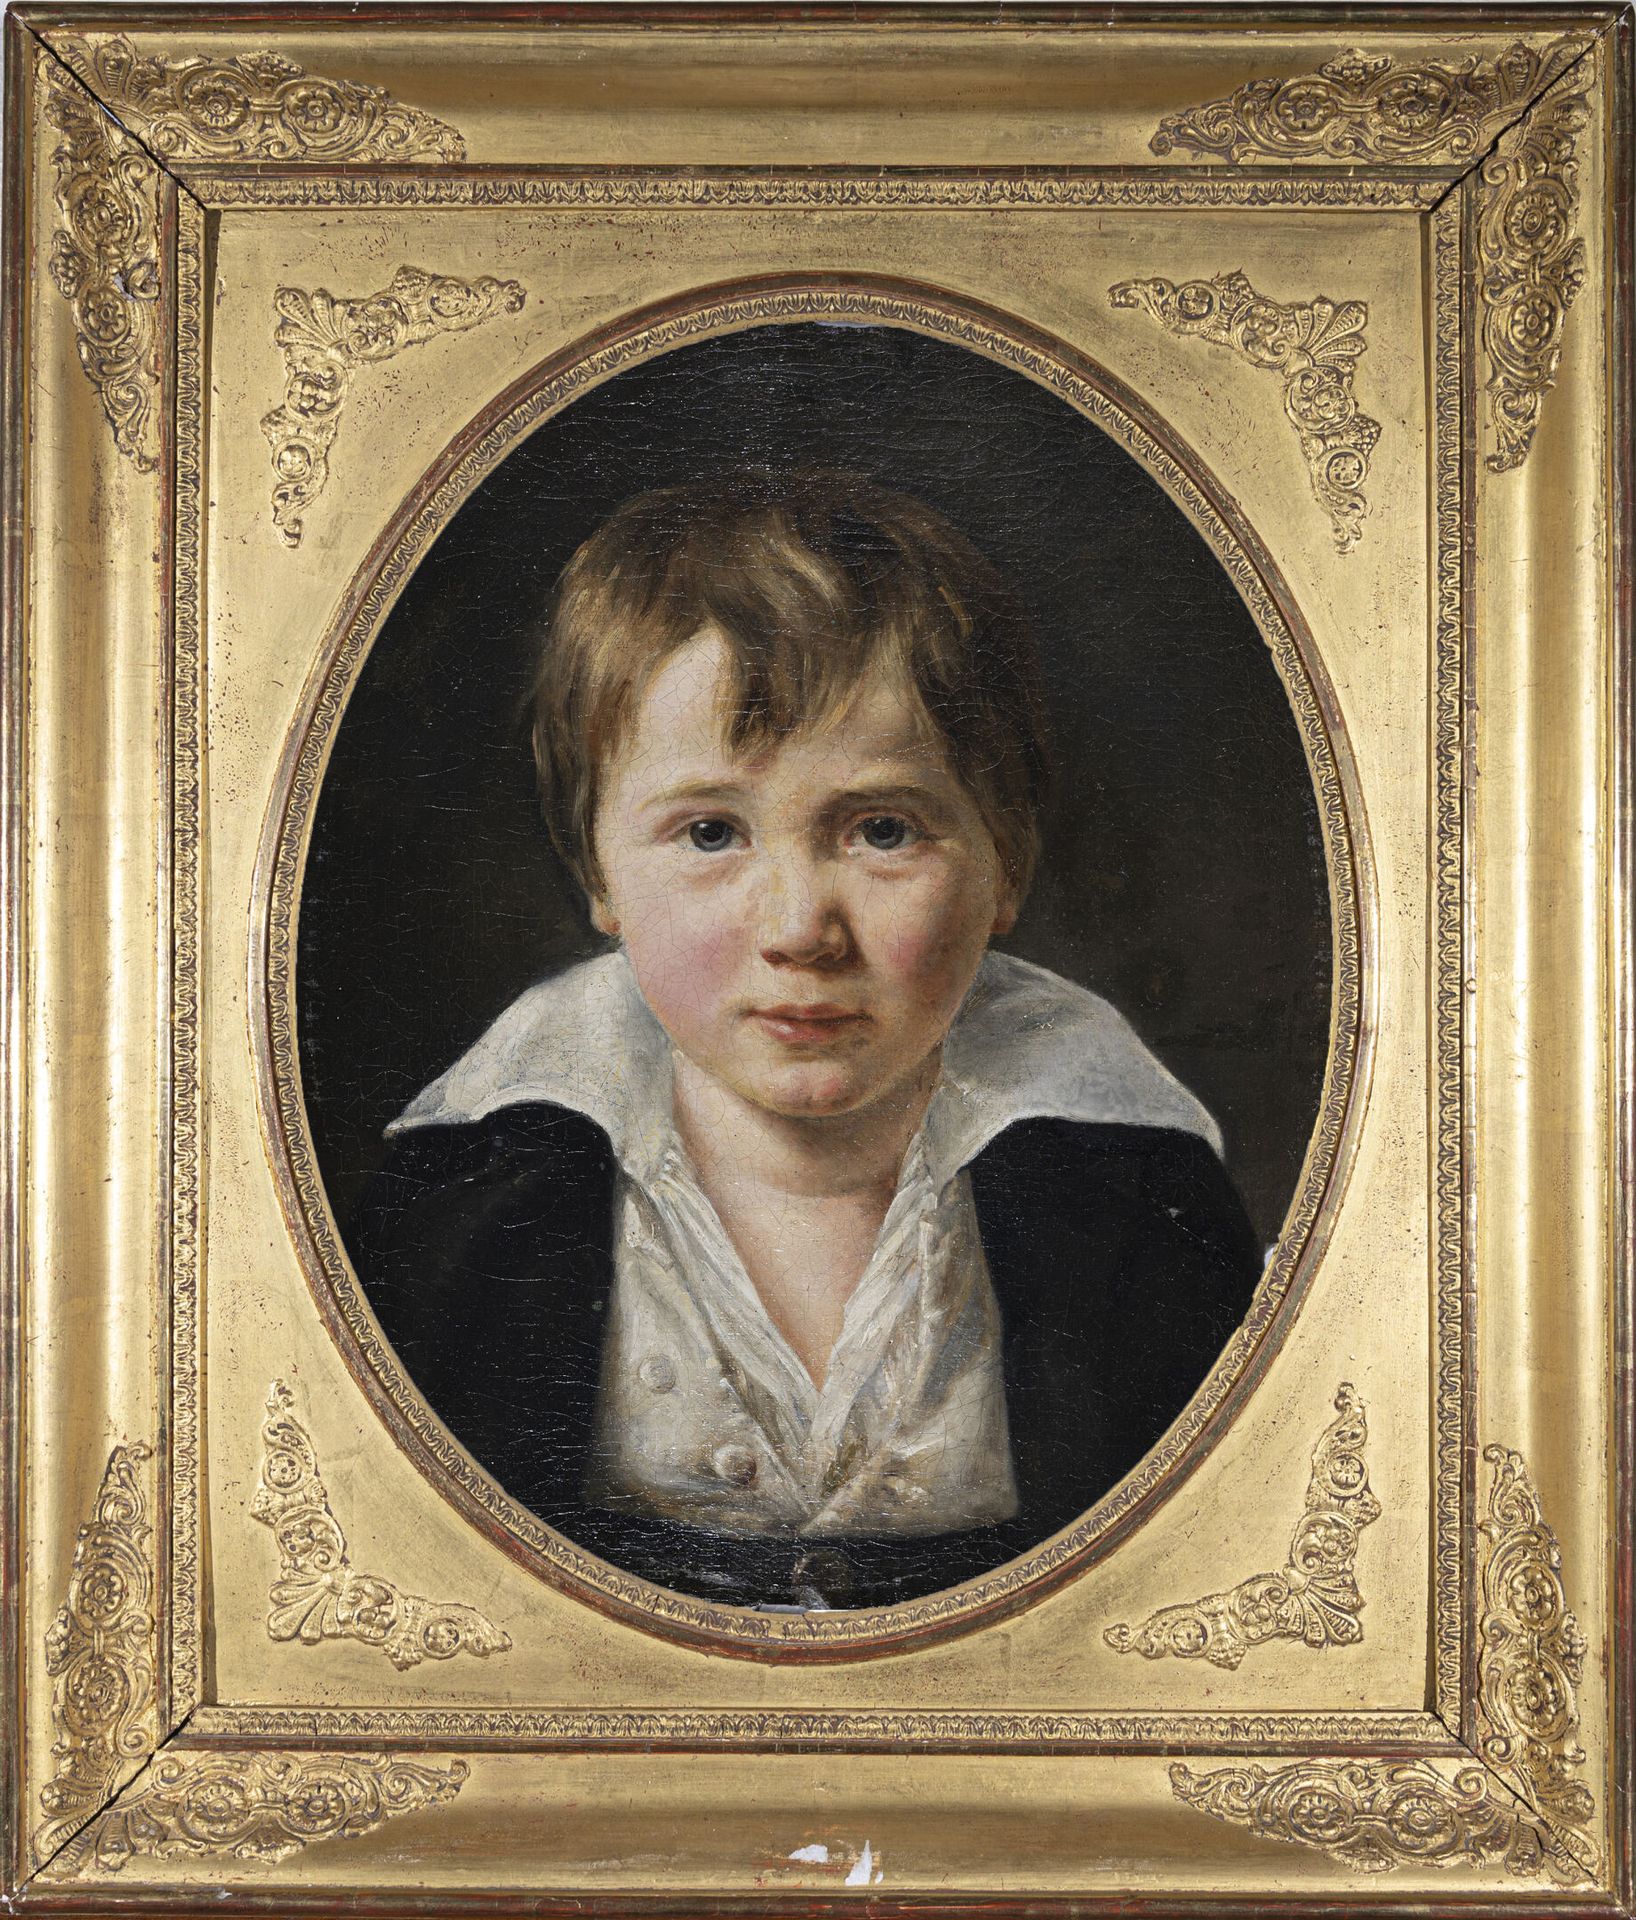 Null 19世纪初的法国学校
一个小男孩的画像
布面油画
高41.5厘米，宽37.5厘米 HVS
修复，美丽的椭圆形观景框